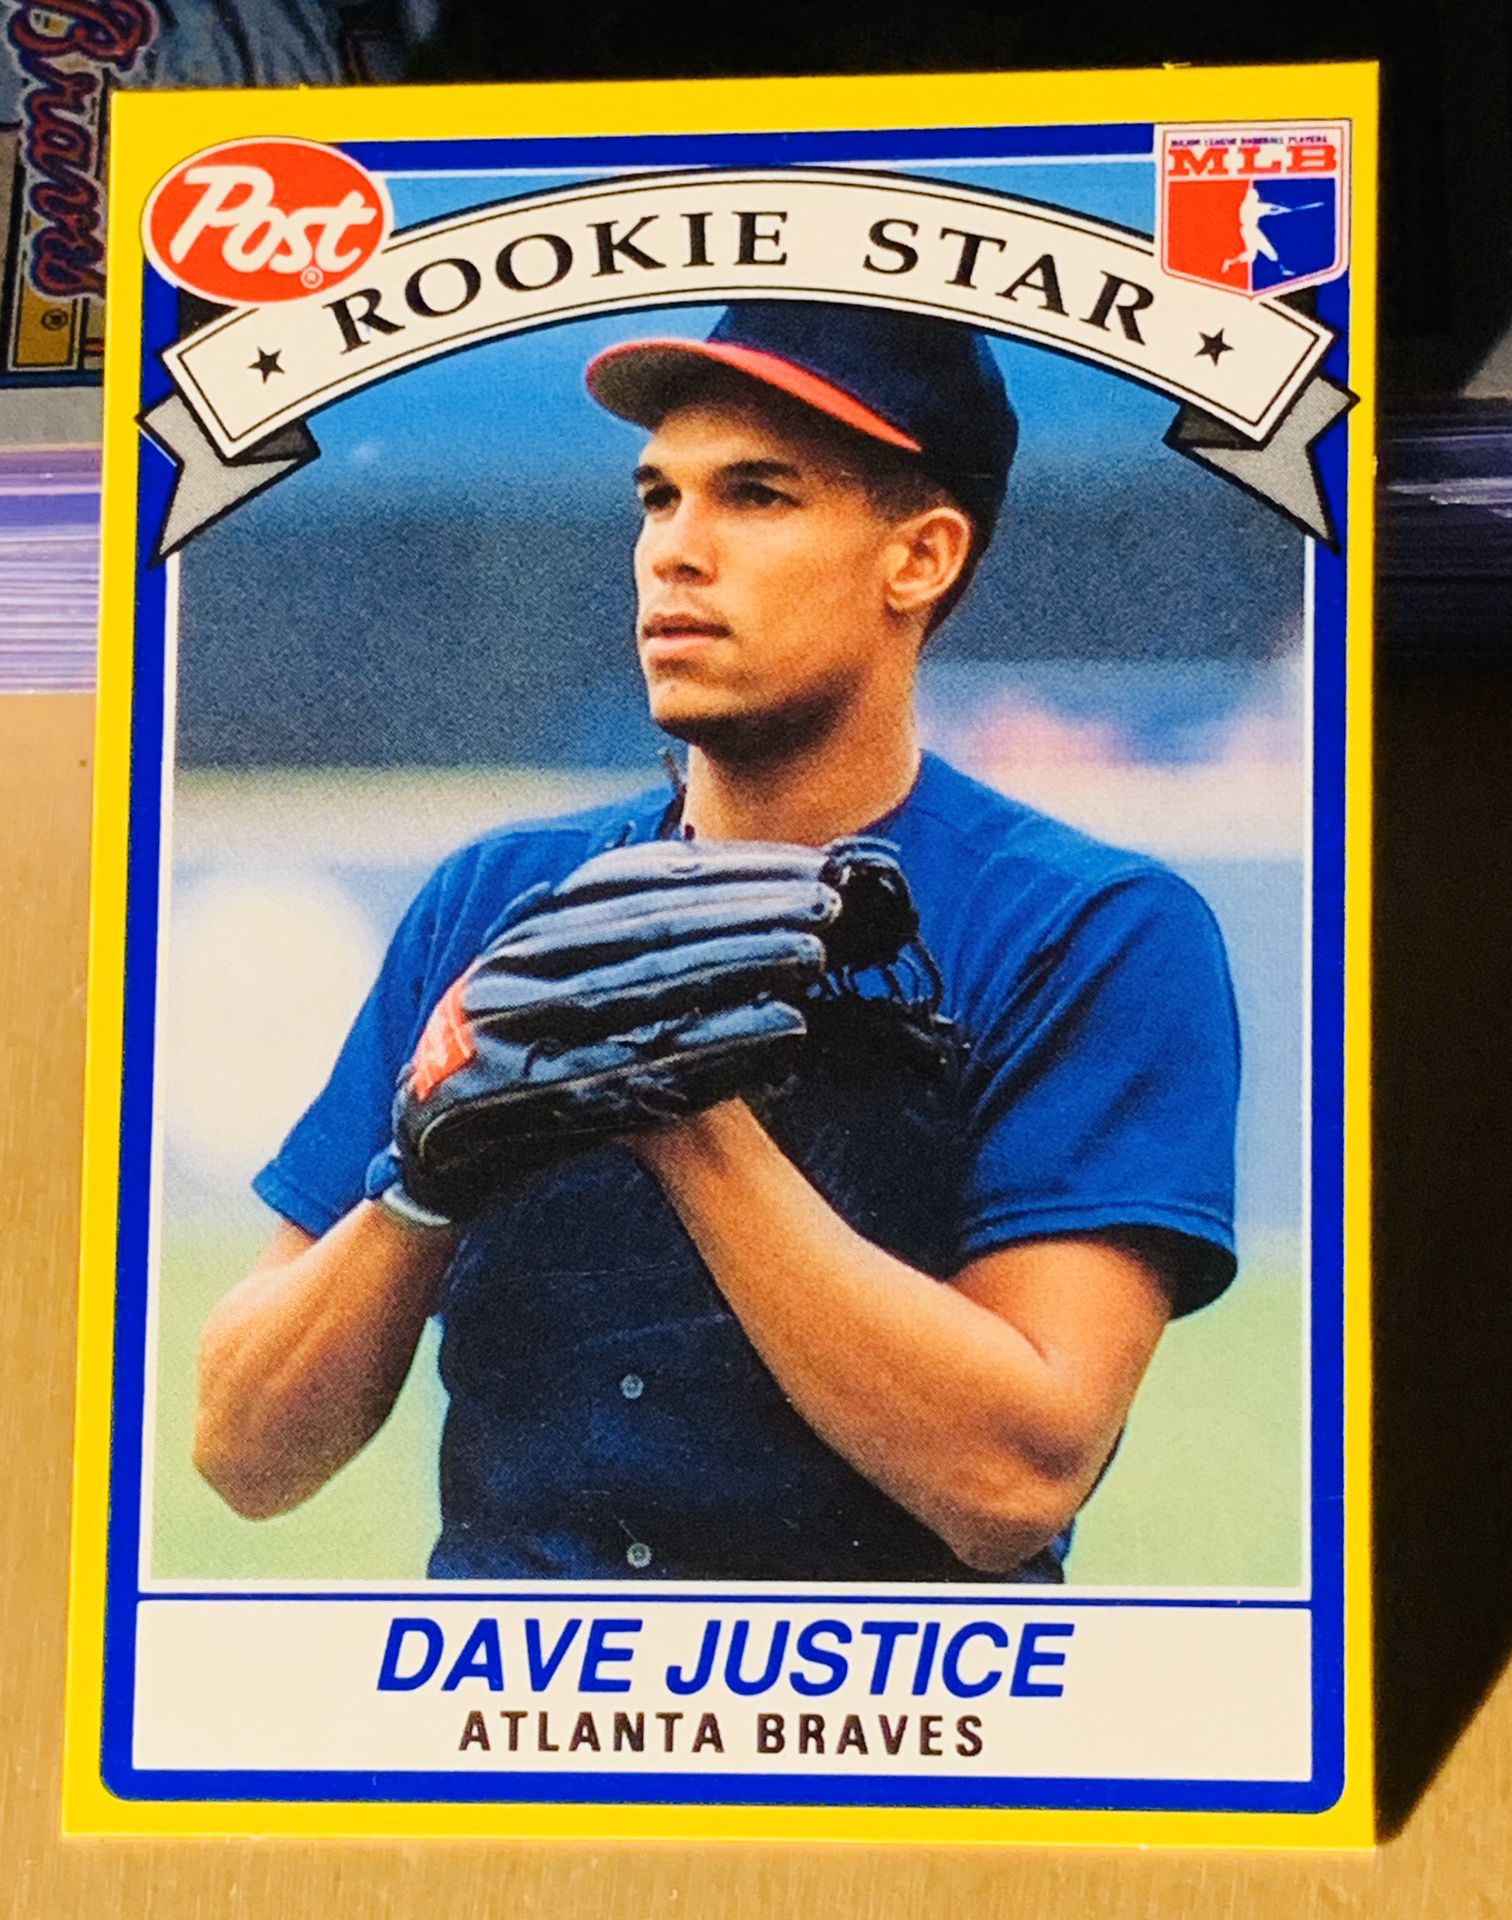 1991 Post Cereal David Justice Atlanta Braves Rookie Star MLB for